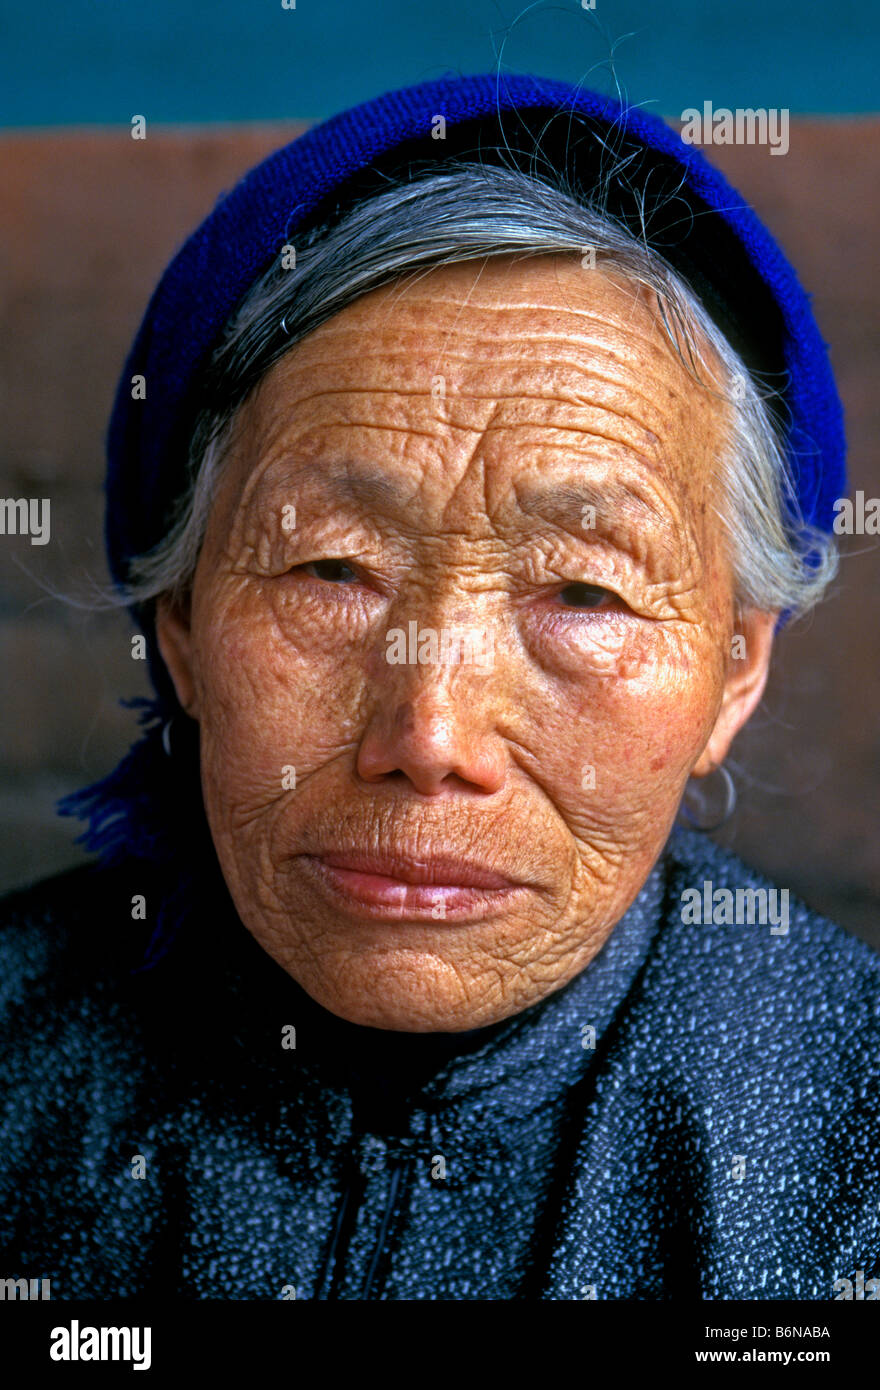 https://c8.alamy.com/comp/B6NABA/1-one-chinese-woman-old-woman-elderly-woman-mature-woman-senior-citizen-B6NABA.jpg